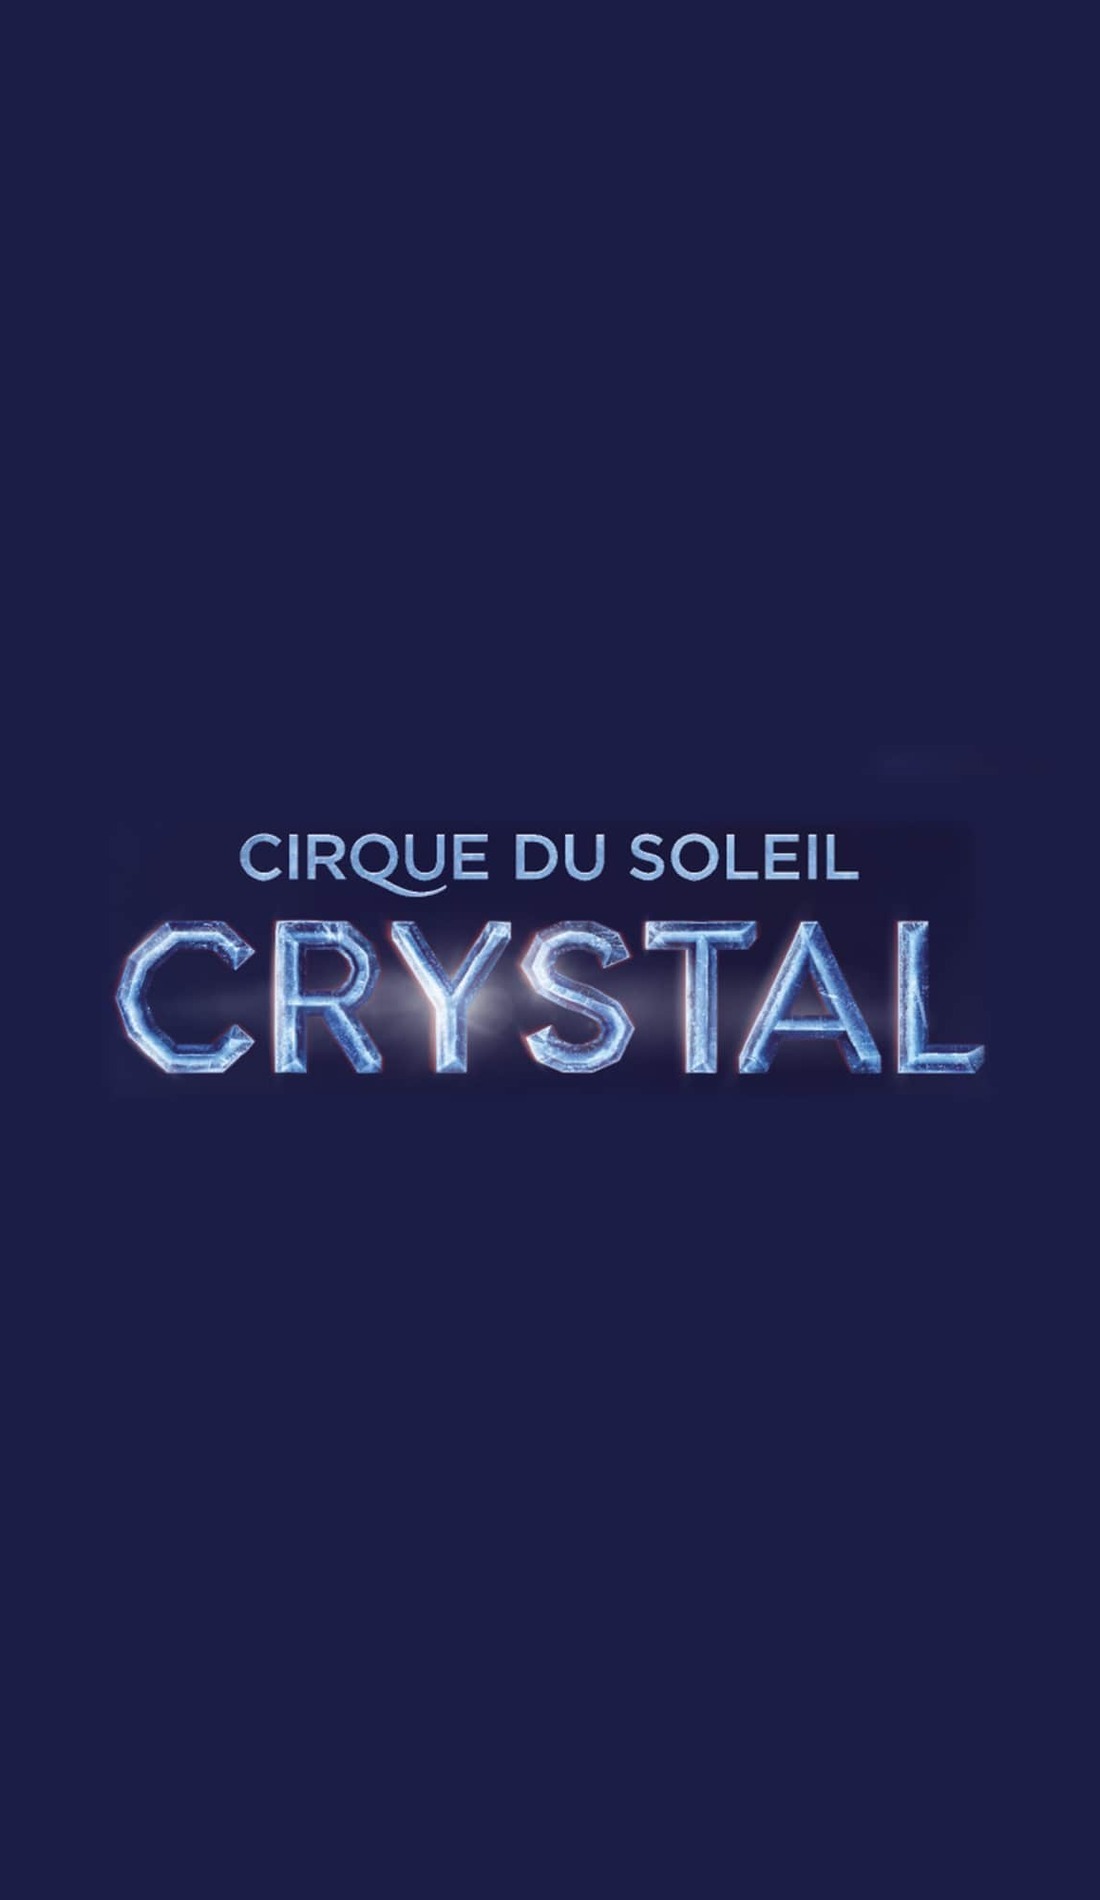 A Cirque du Soleil: Crystal live event